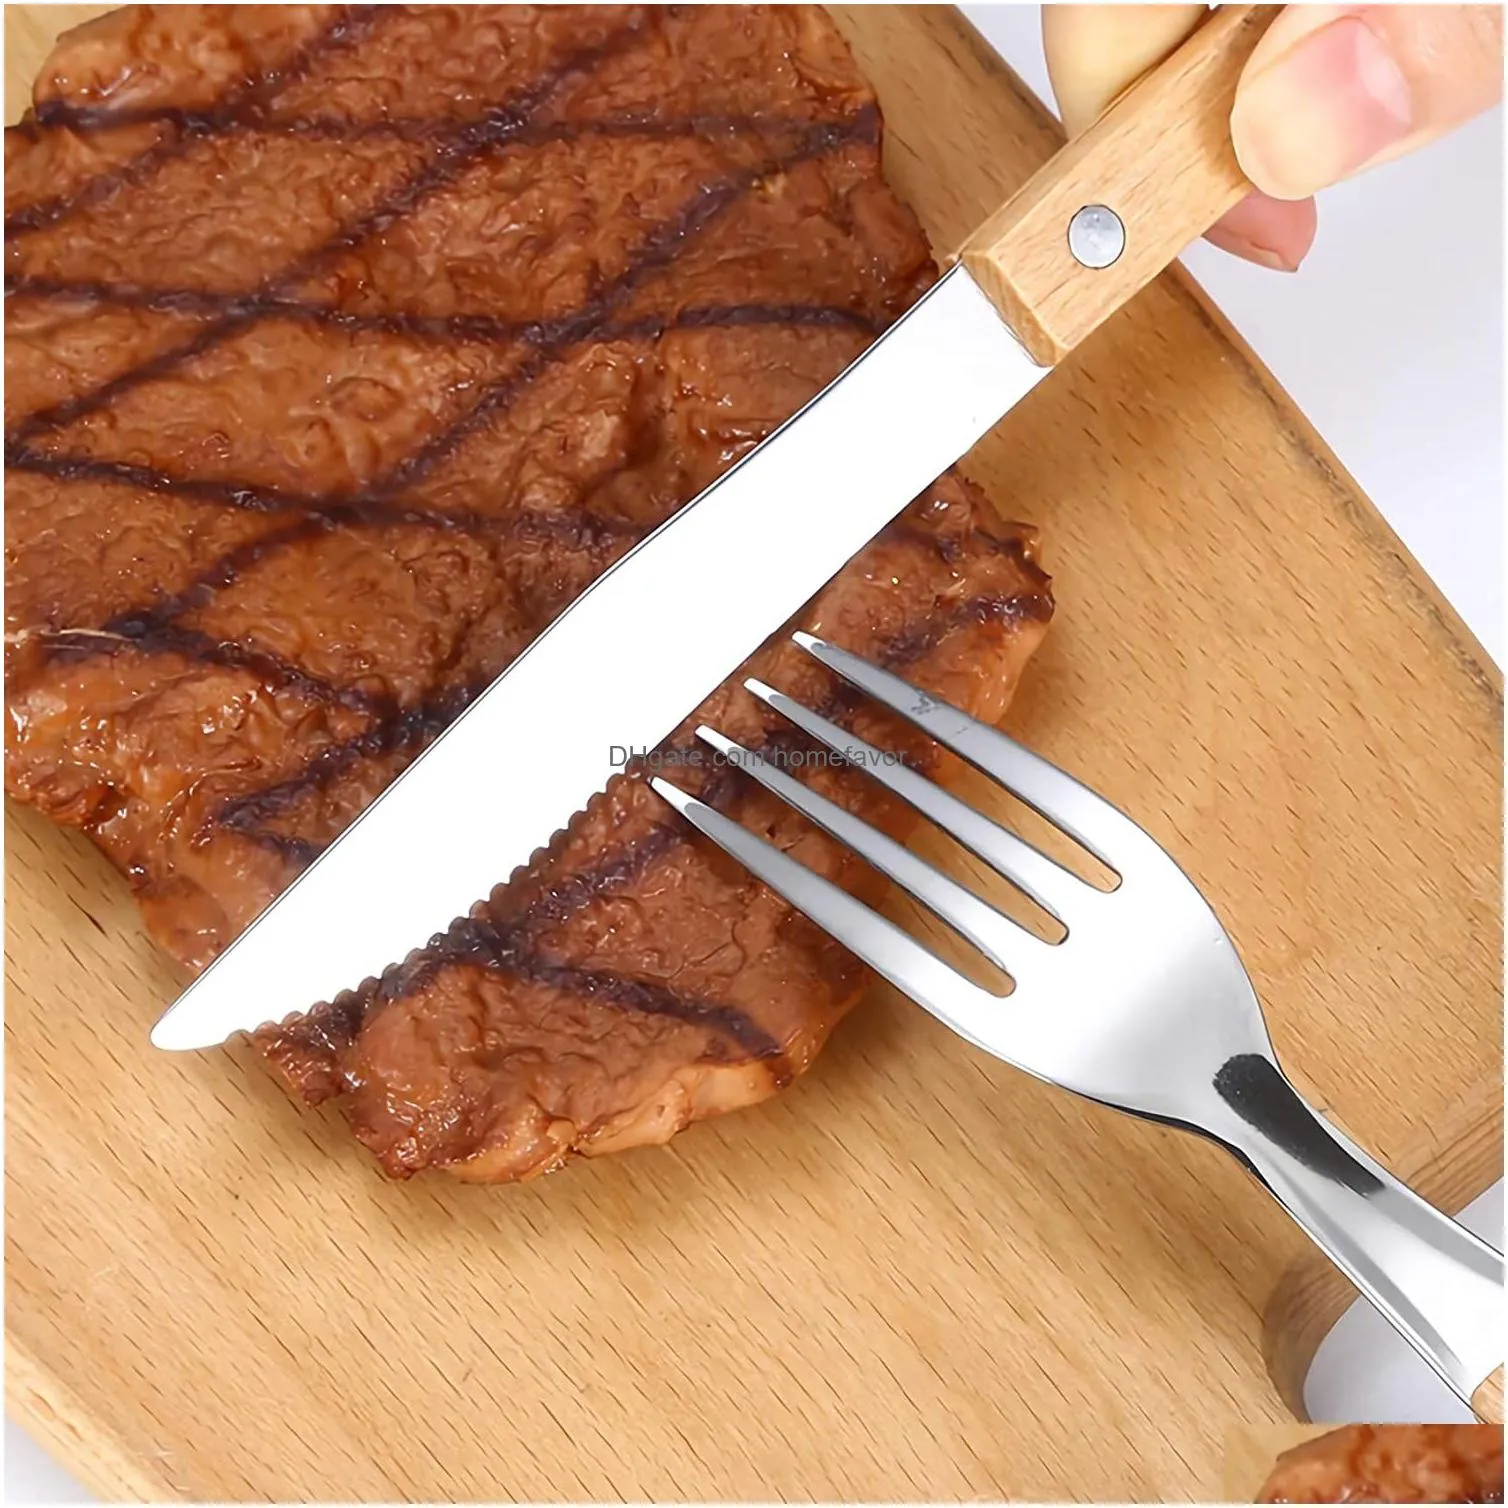 flatware cutlery sets dinner spoons knife and fork set 304 stainless steel with wooden wide handles tableware dinnerware